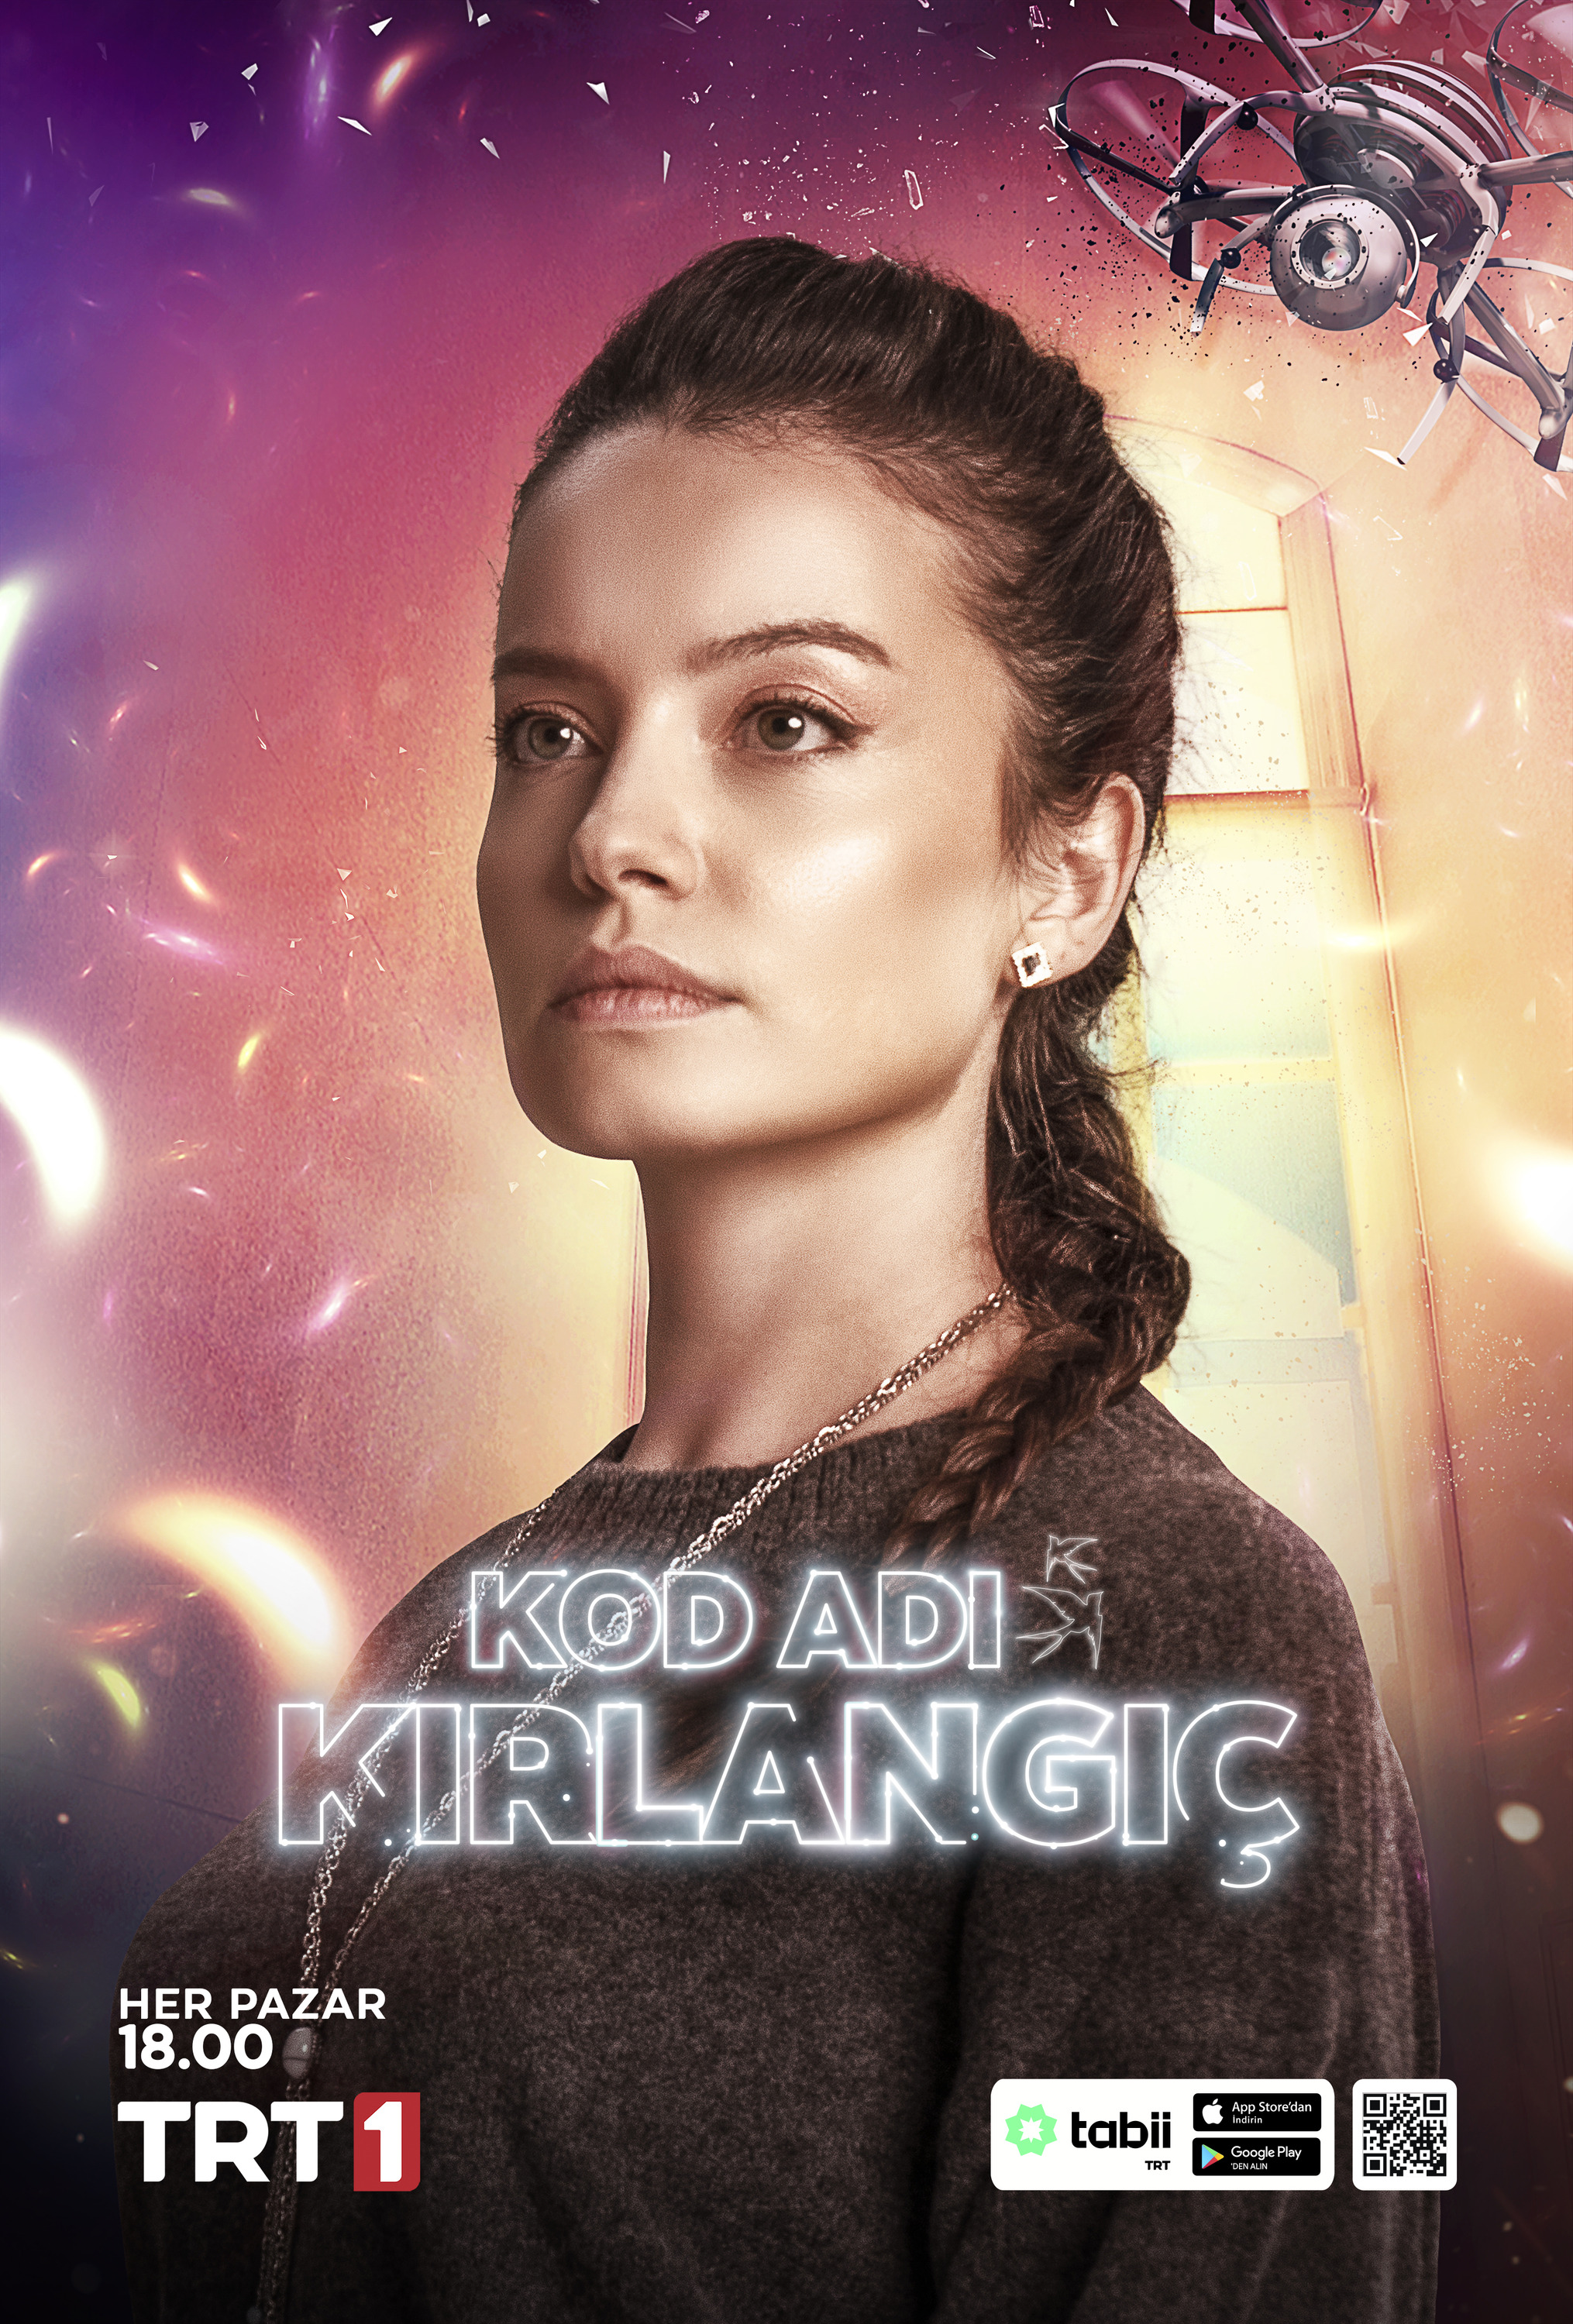 Mega Sized TV Poster Image for Kod Adı Kırlangıç (#11 of 11)